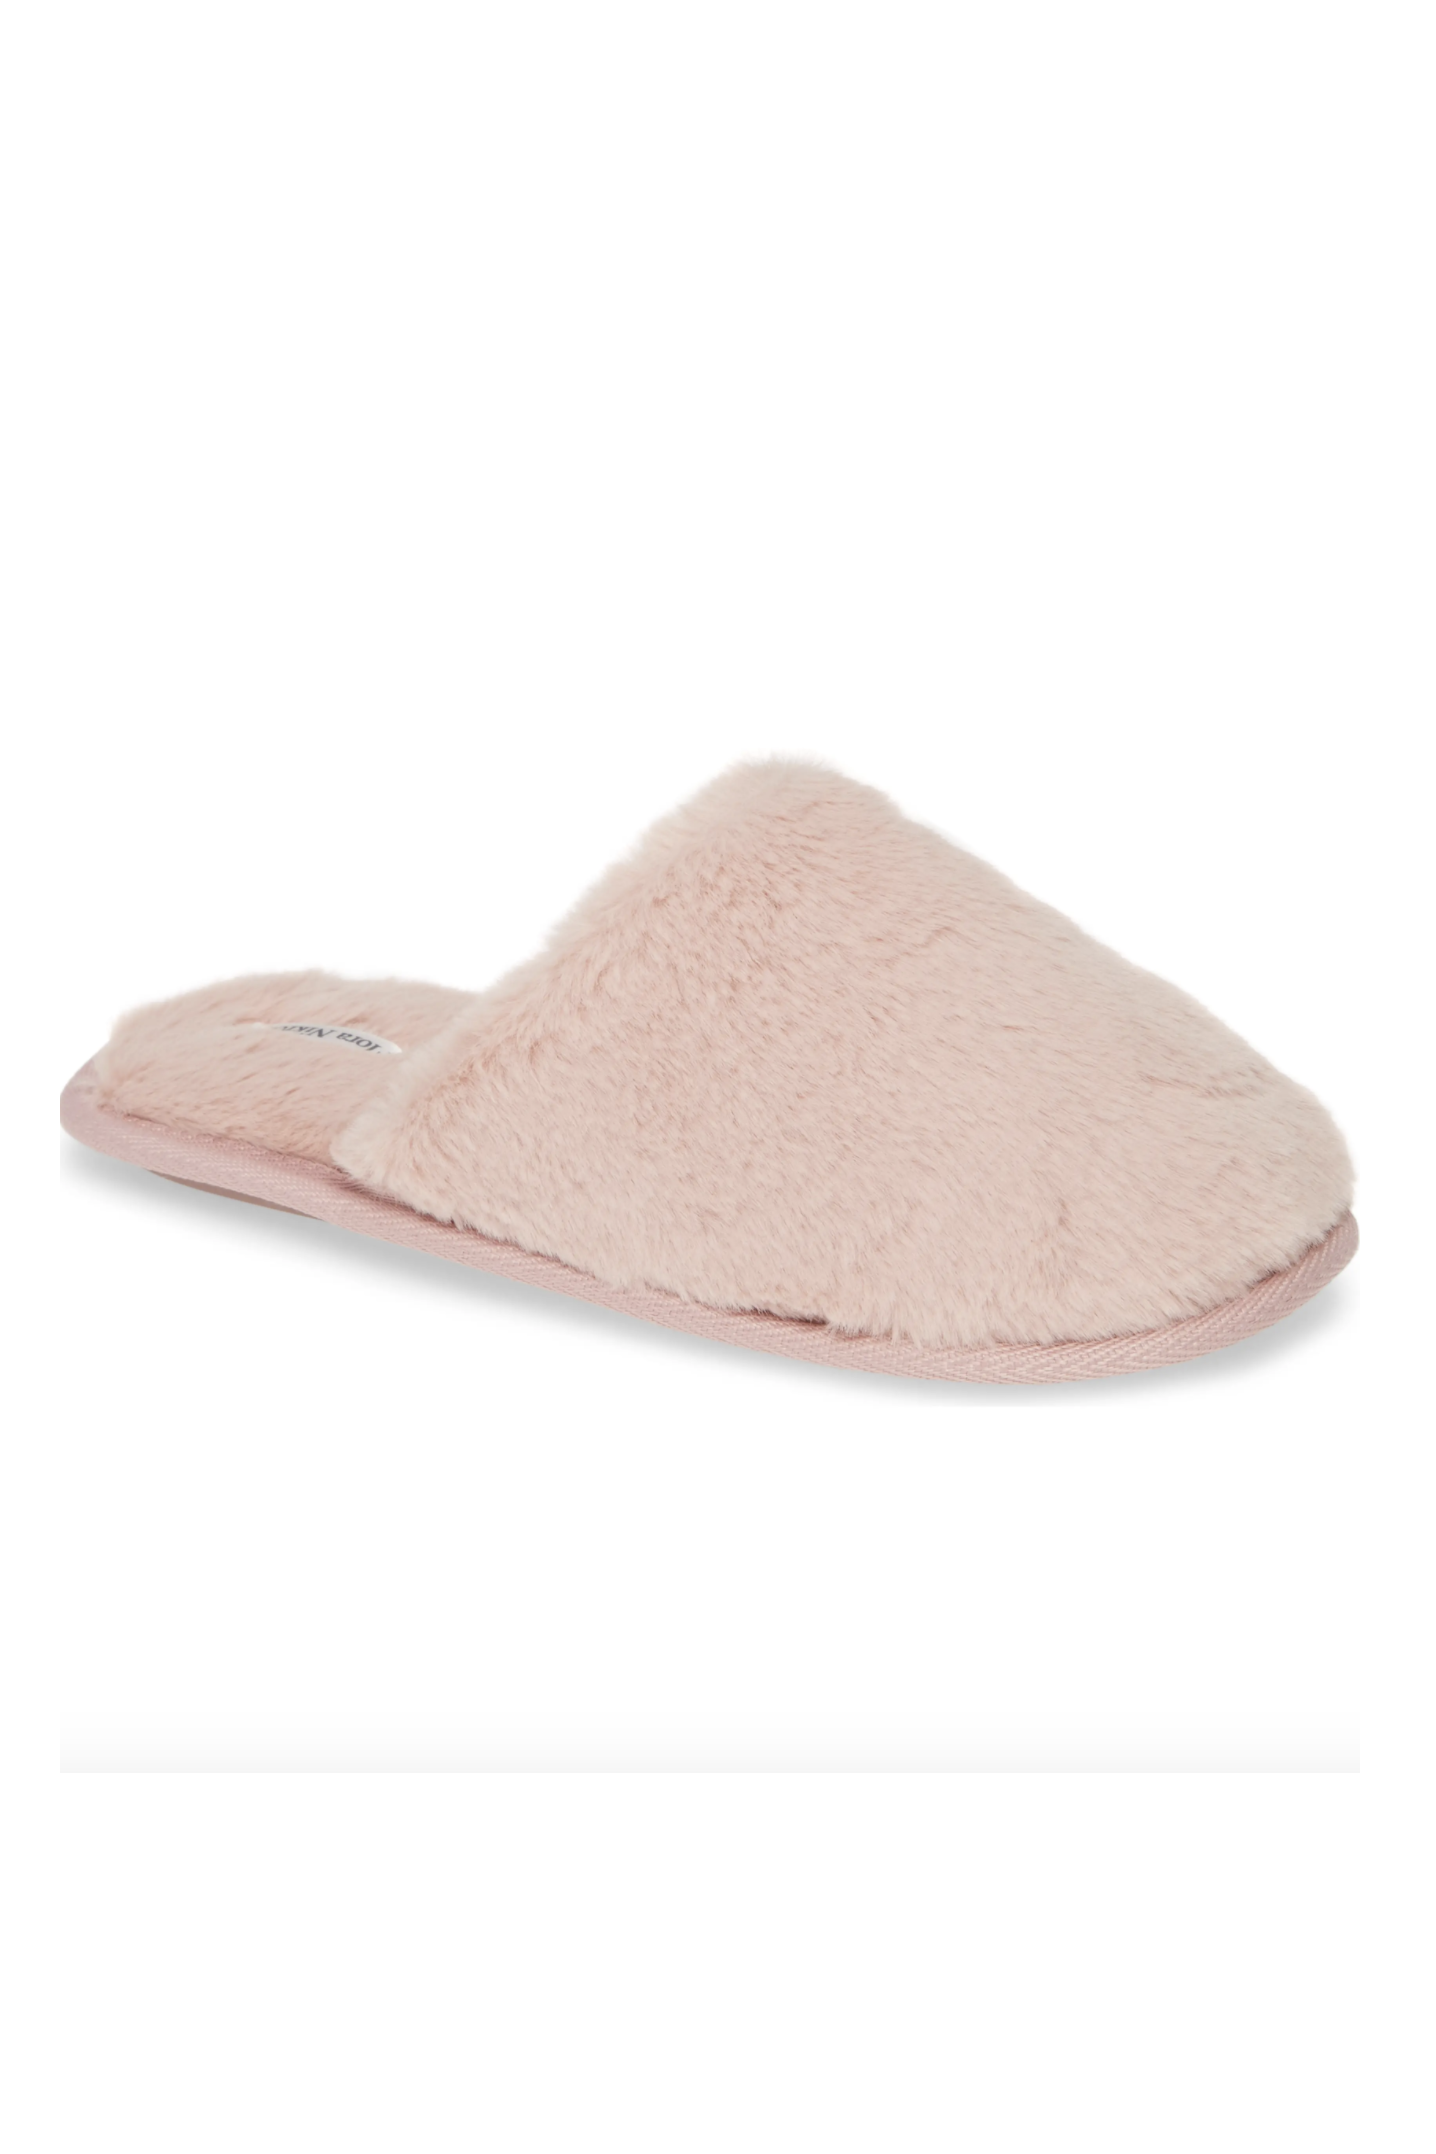 womens house slippers for summer